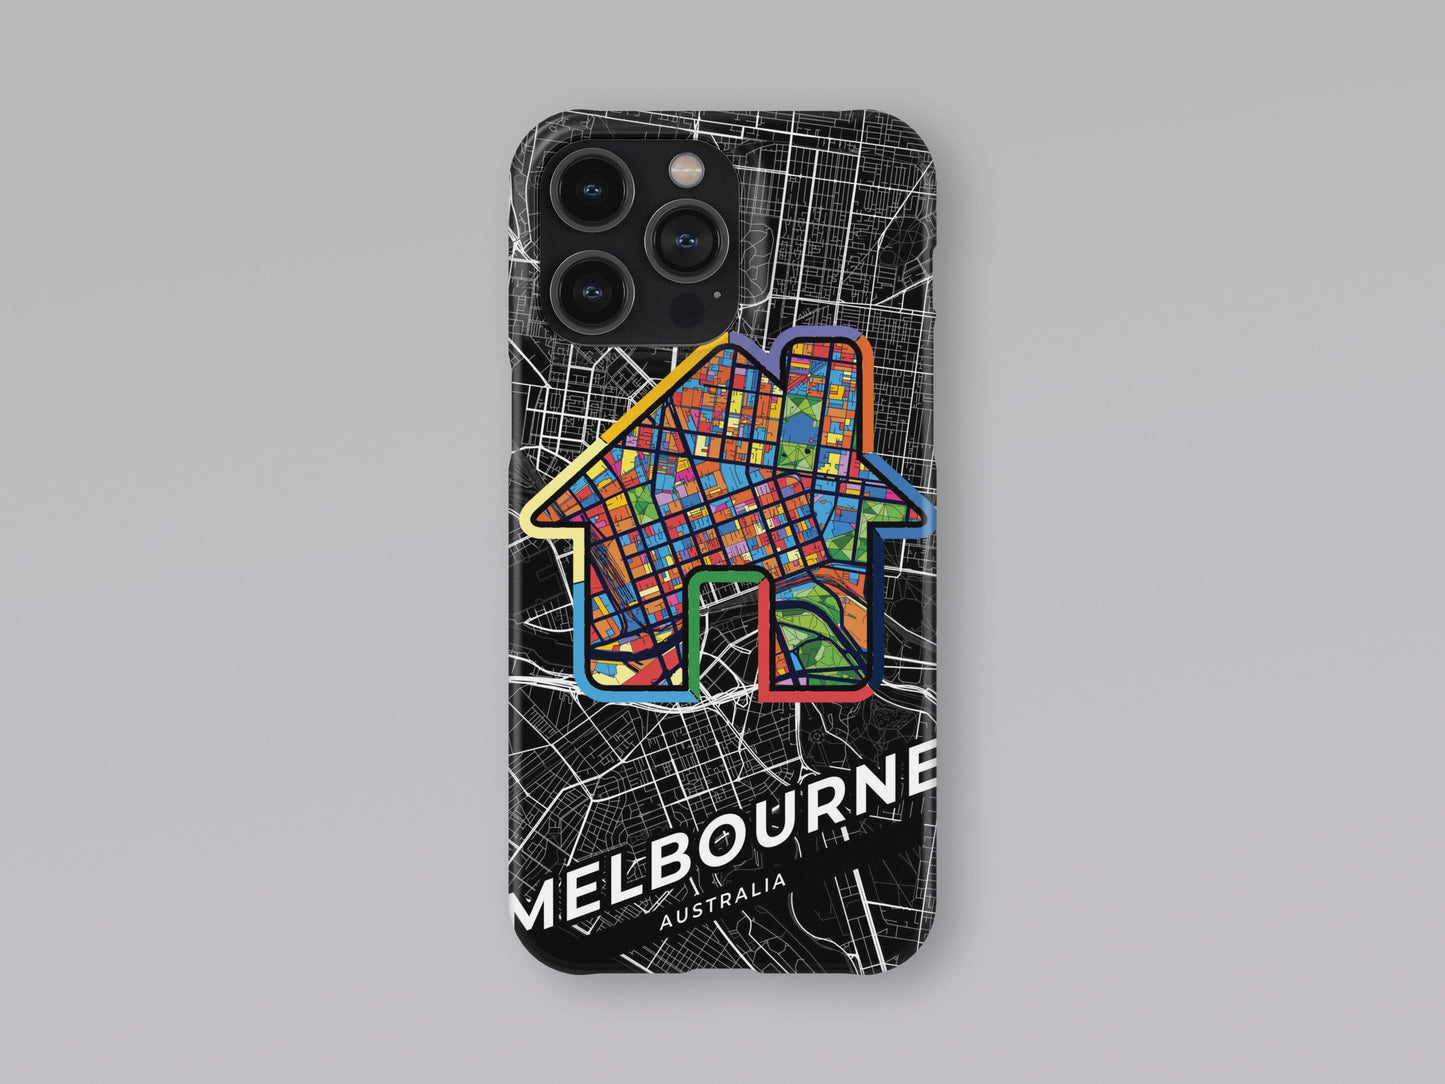 Melbourne Australia slim phone case with colorful icon 3